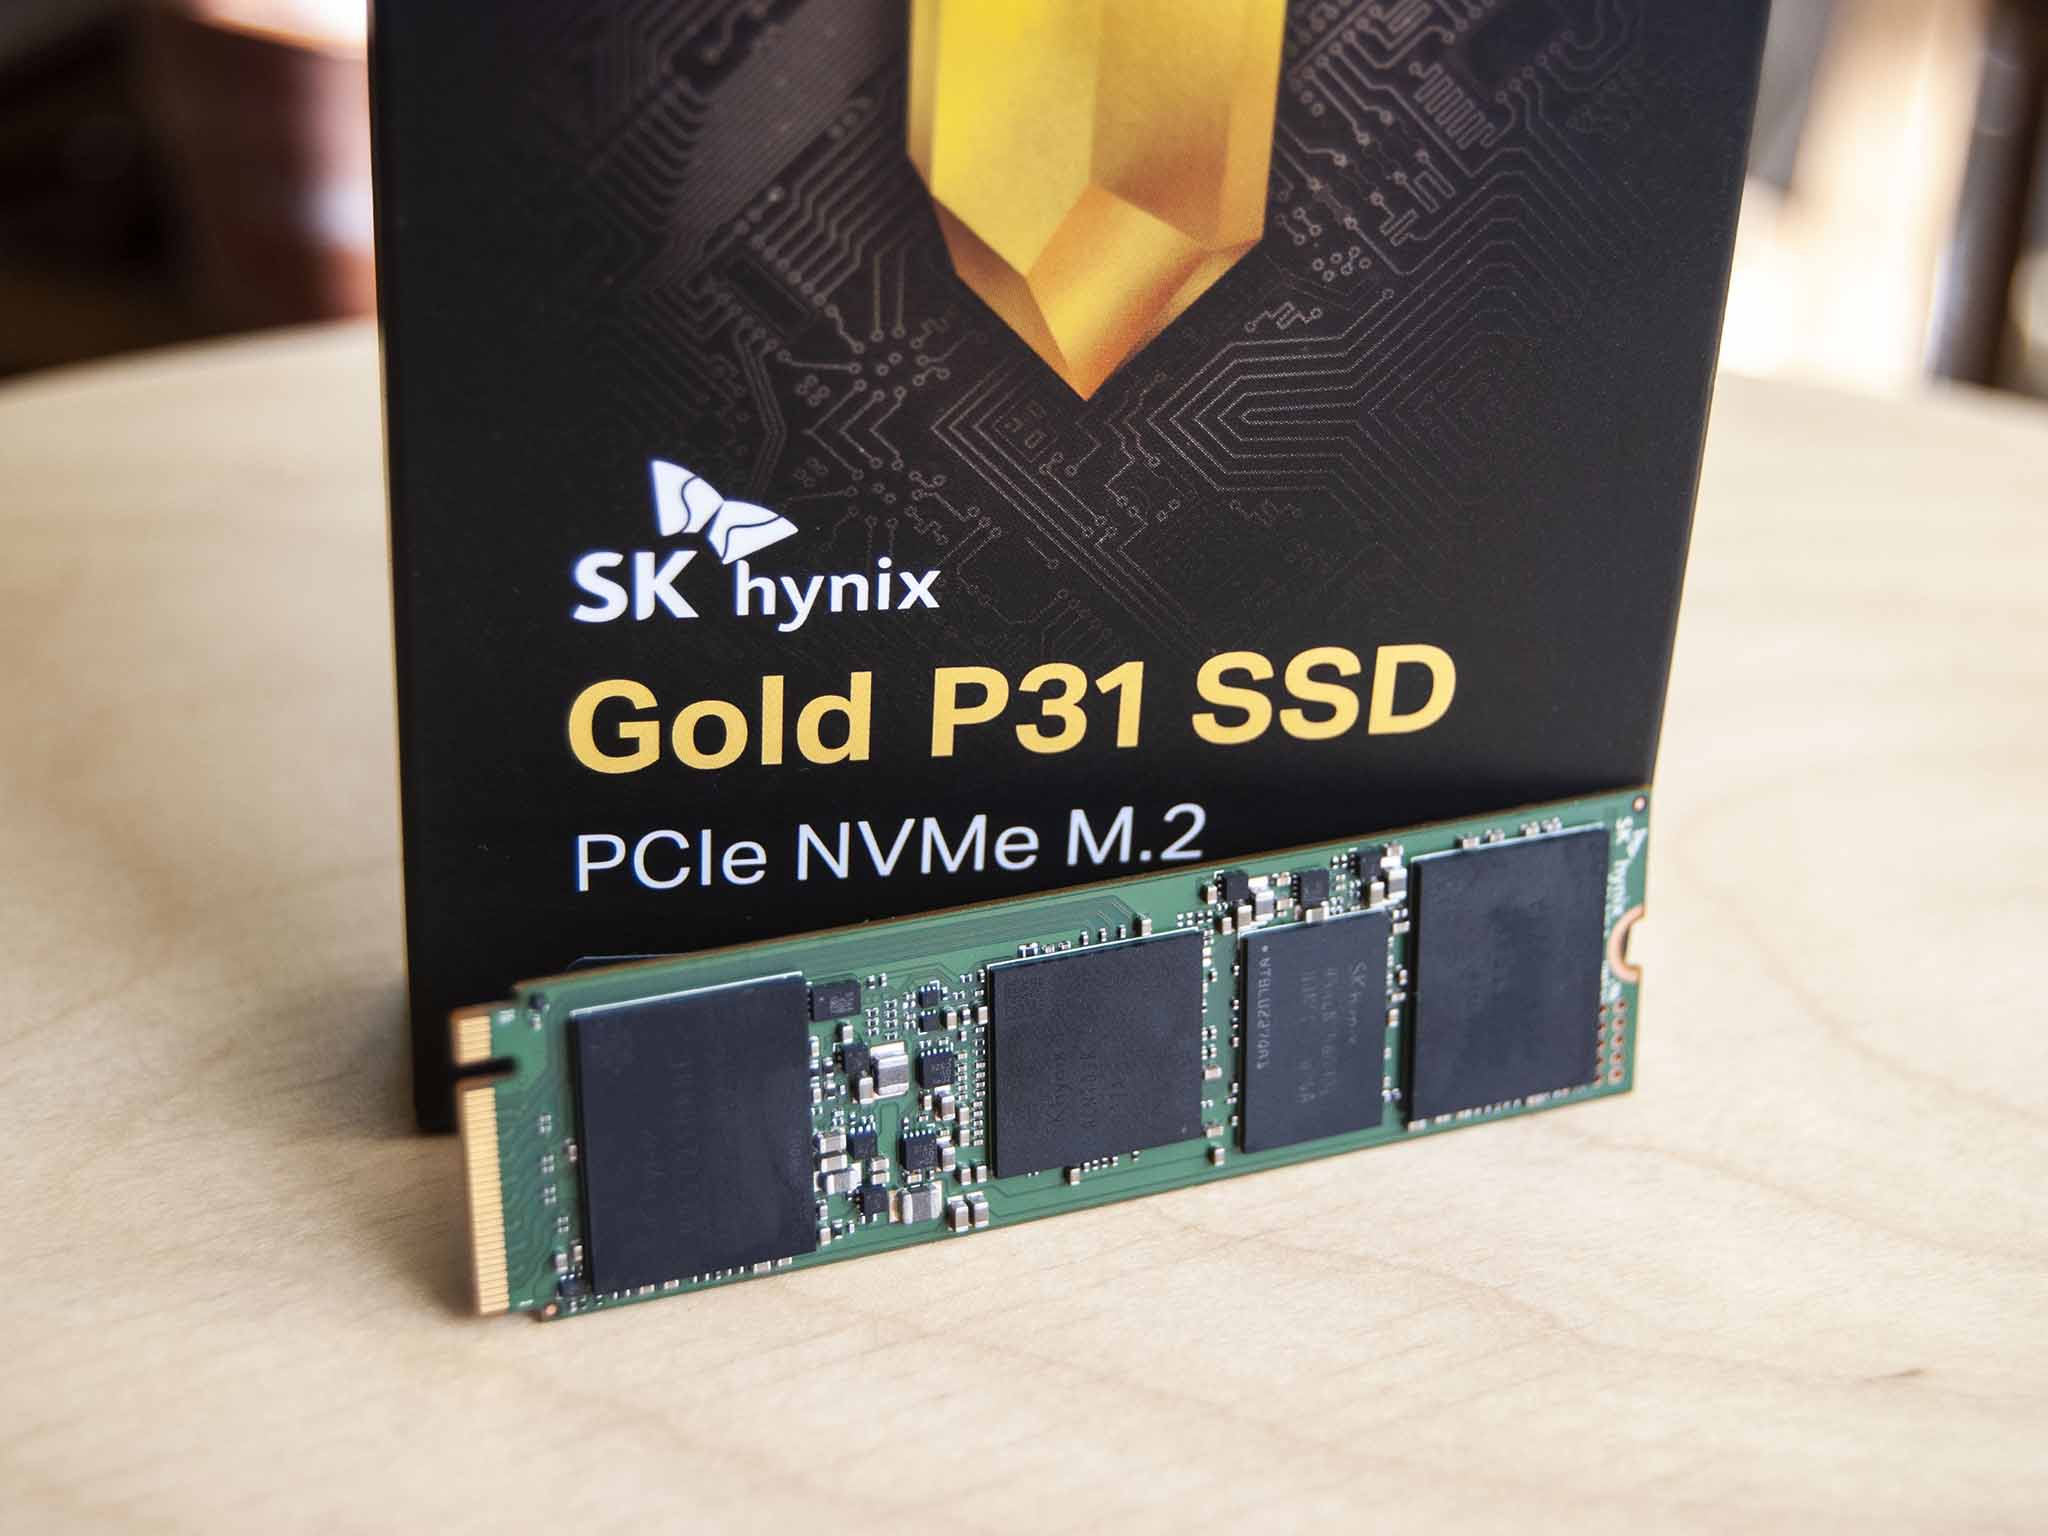 grado empresario Tercero SK hynix Gold P31 SSD review: Impressive performance and price shake up the  storage market | Windows Central